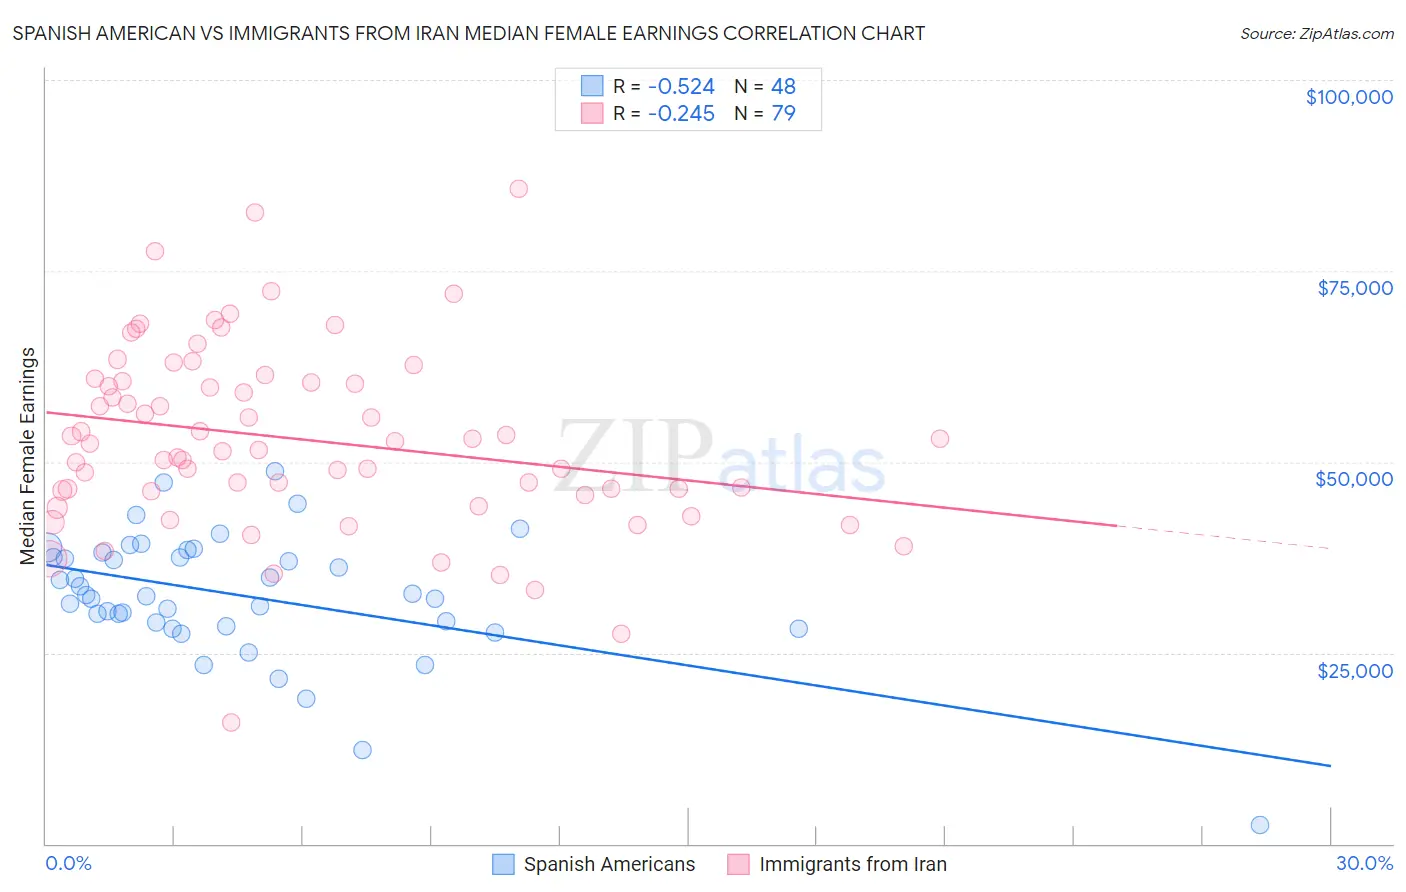 Spanish American vs Immigrants from Iran Median Female Earnings